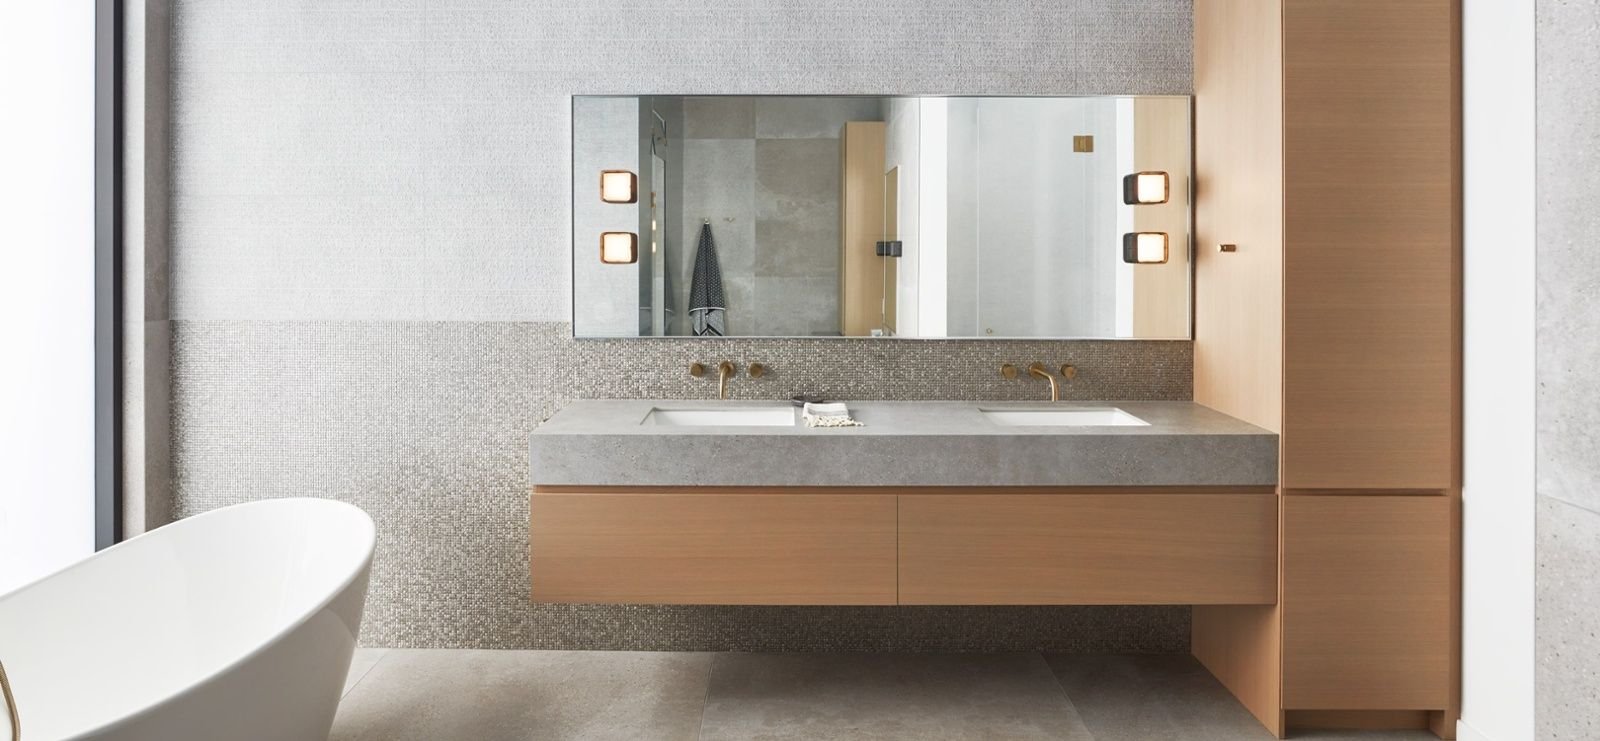 interior natural stone finishes in custom modern bathroom-1-1